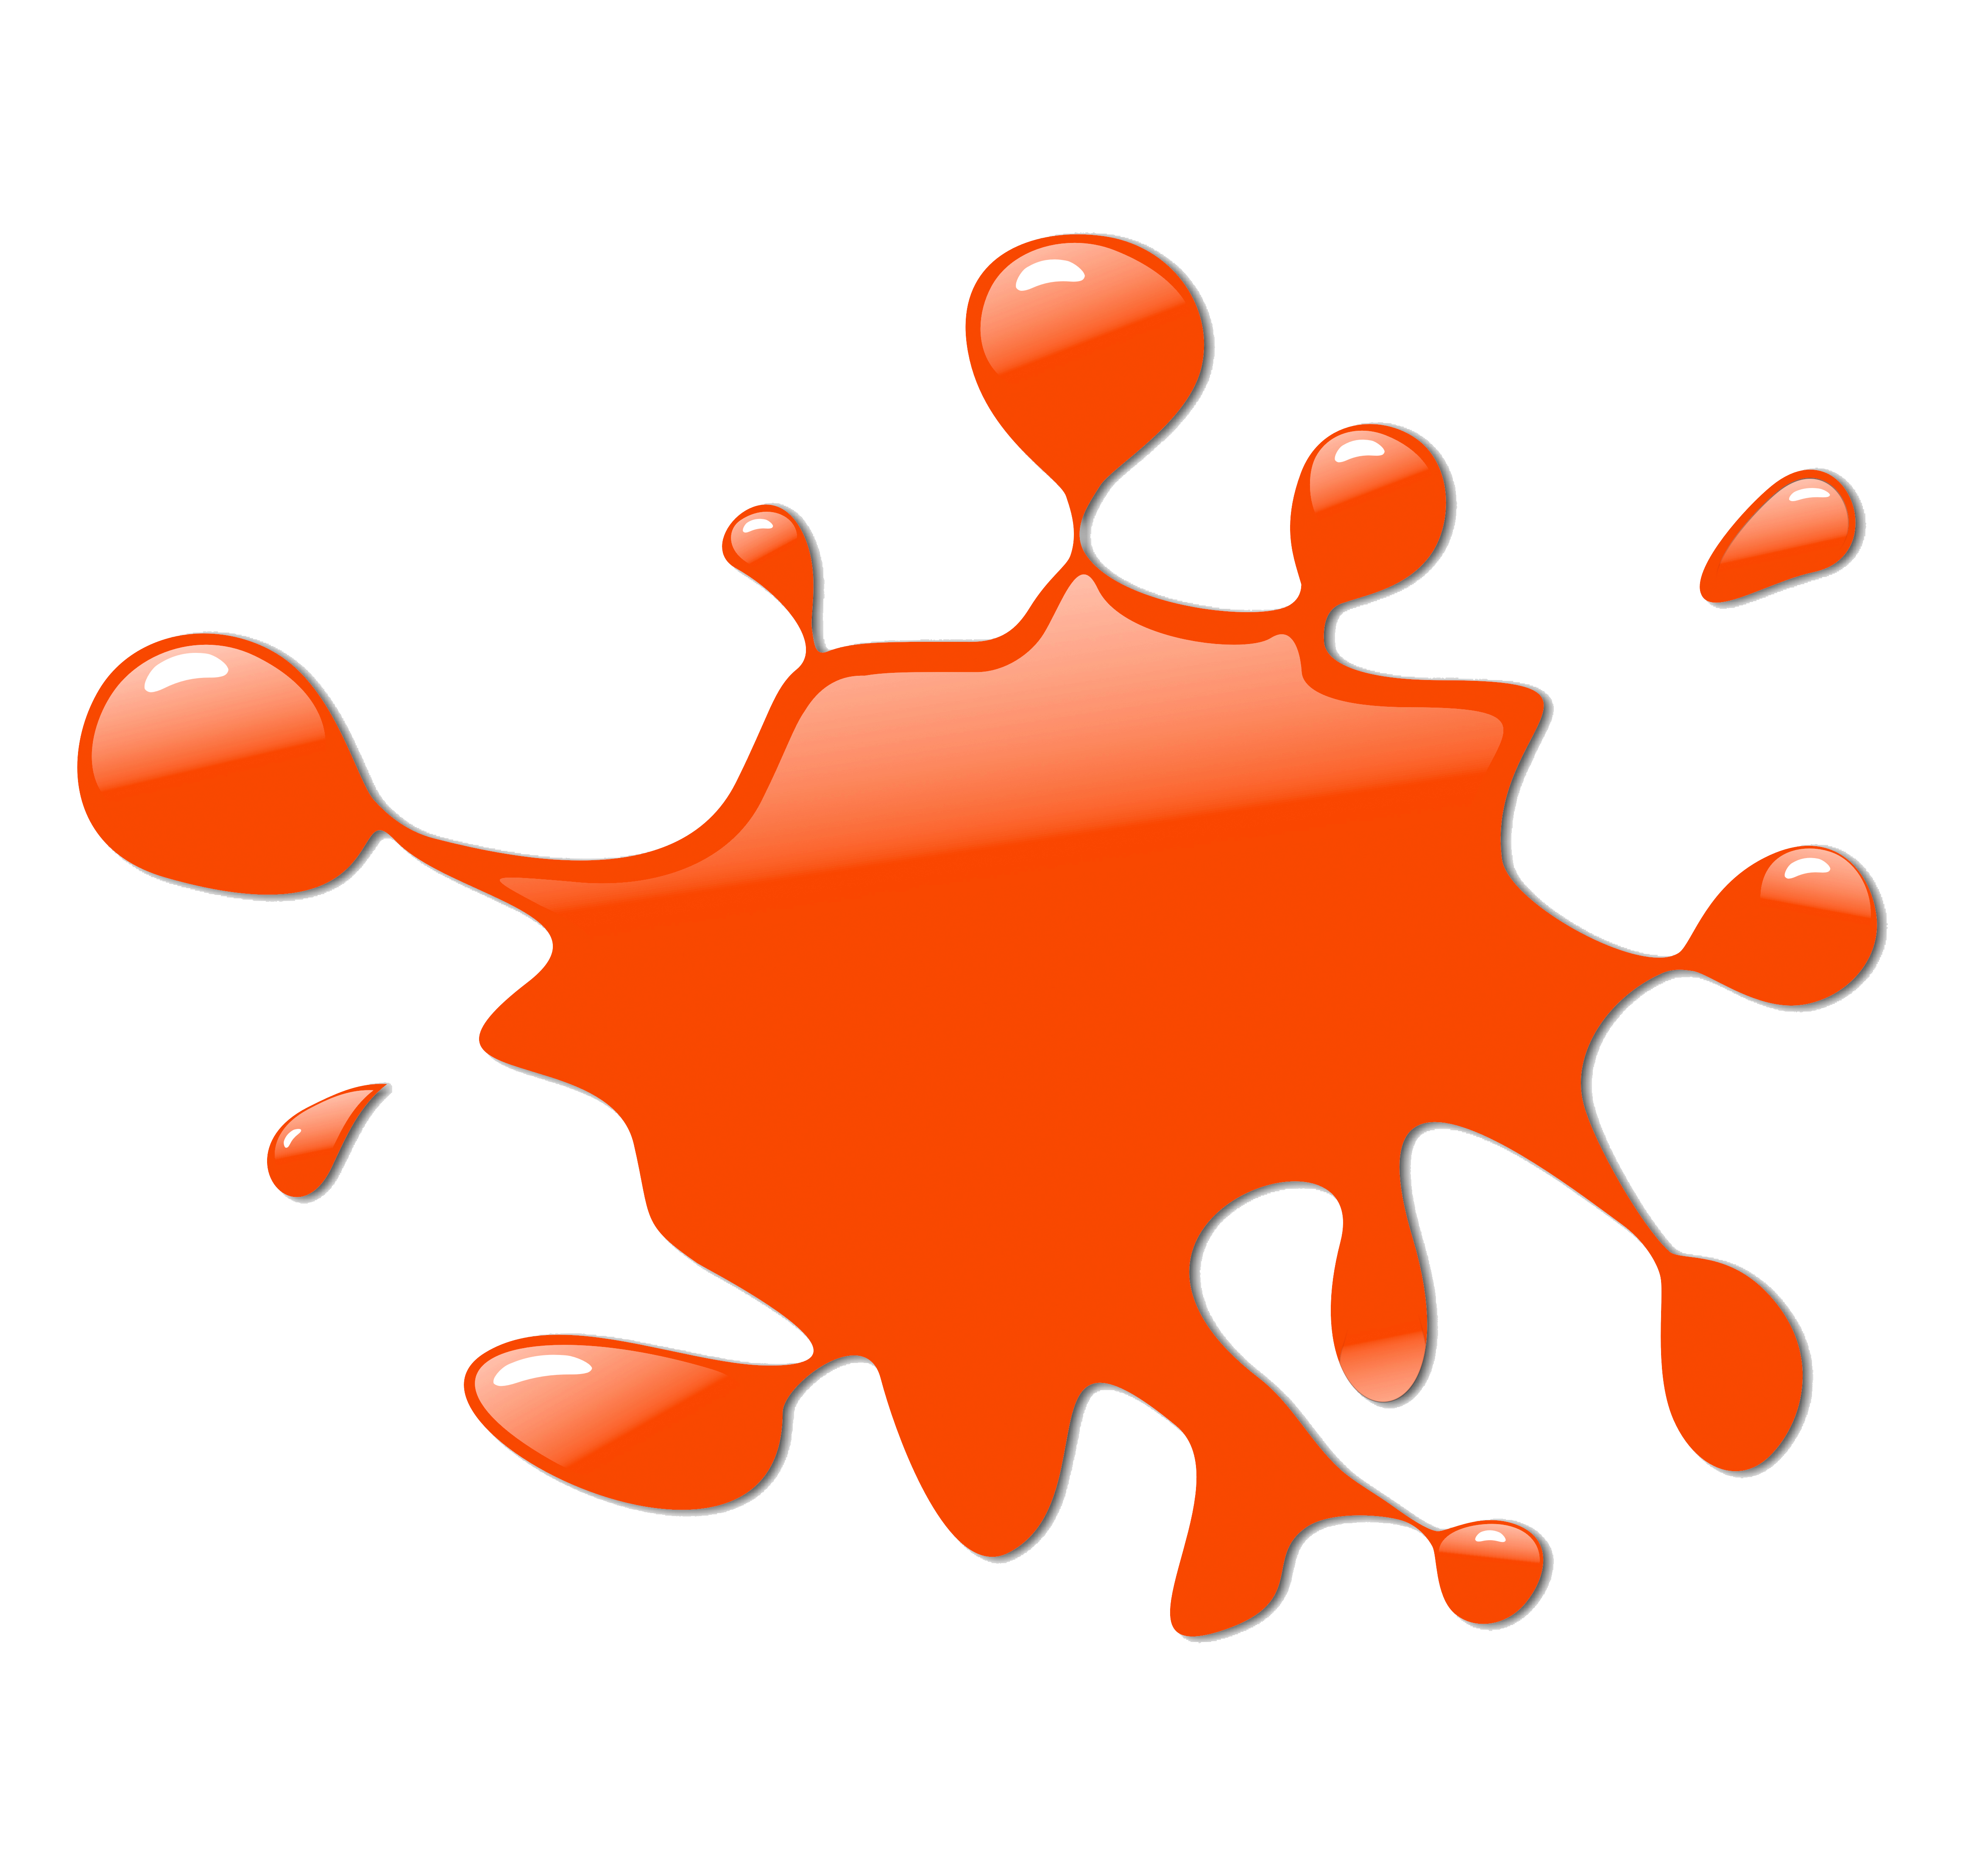 orange paint splatter images free vectors stock photos amp psd